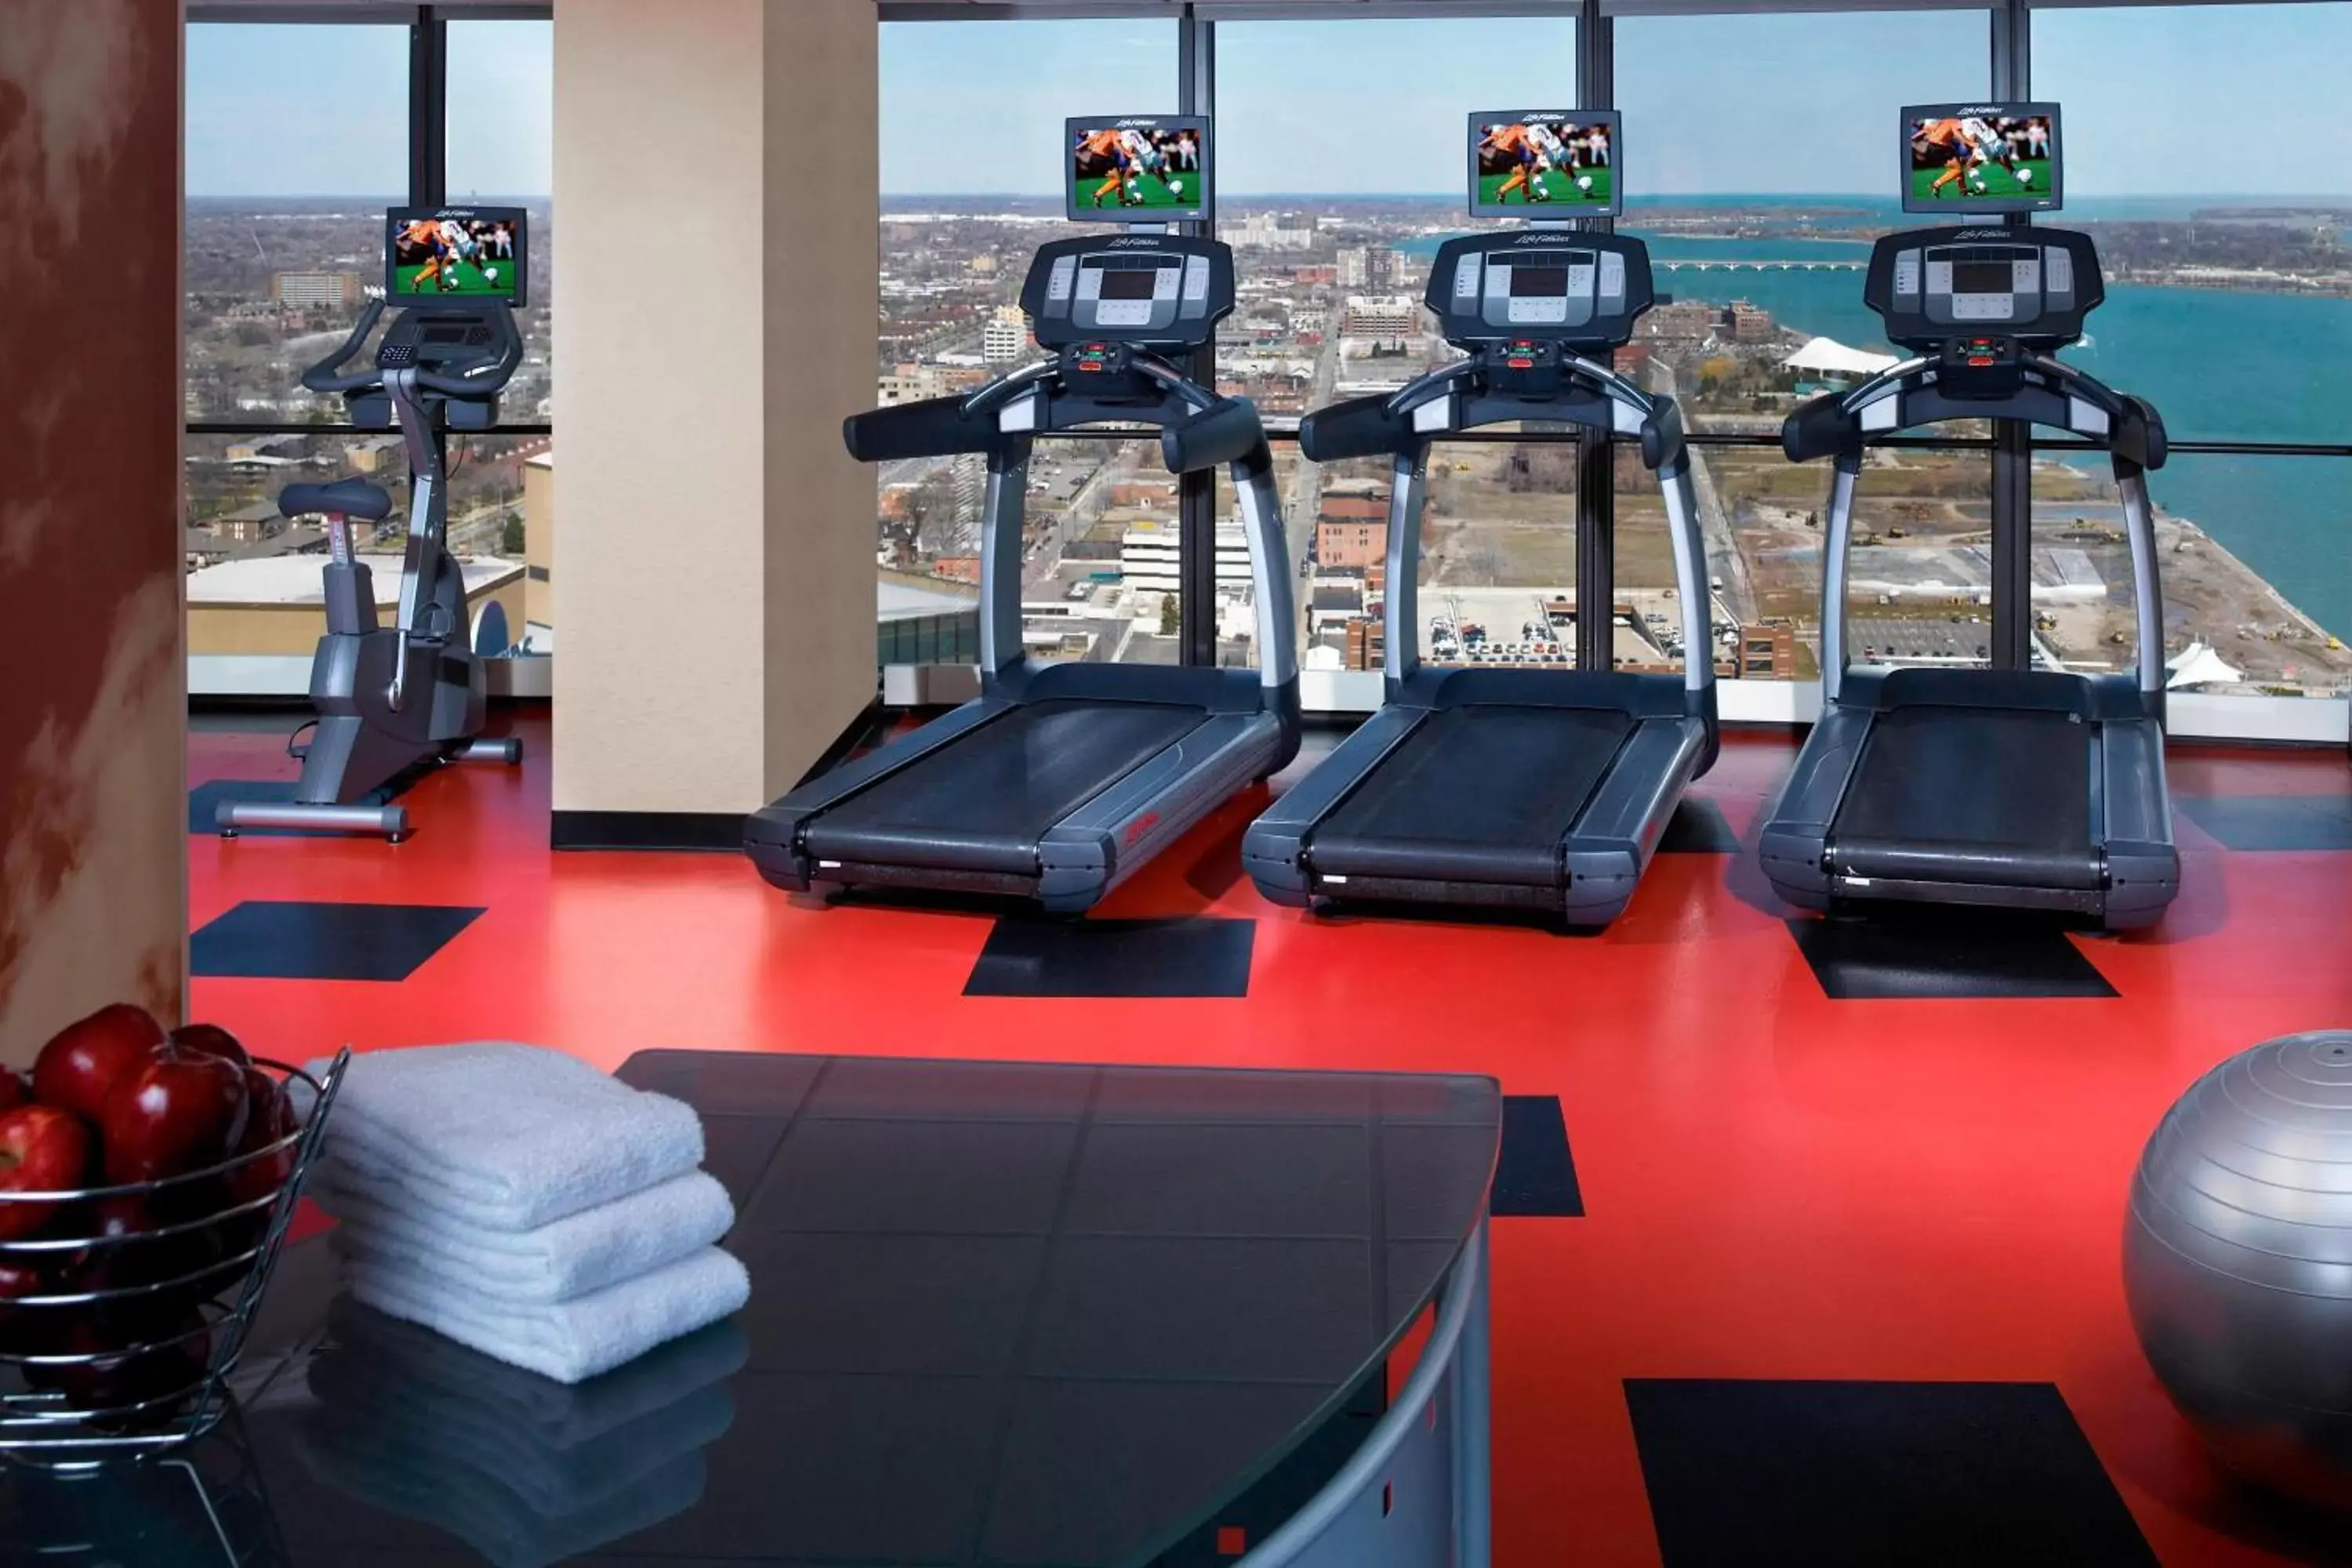 Fitness centre/facilities, Fitness Center/Facilities in Detroit Marriott at the Renaissance Center